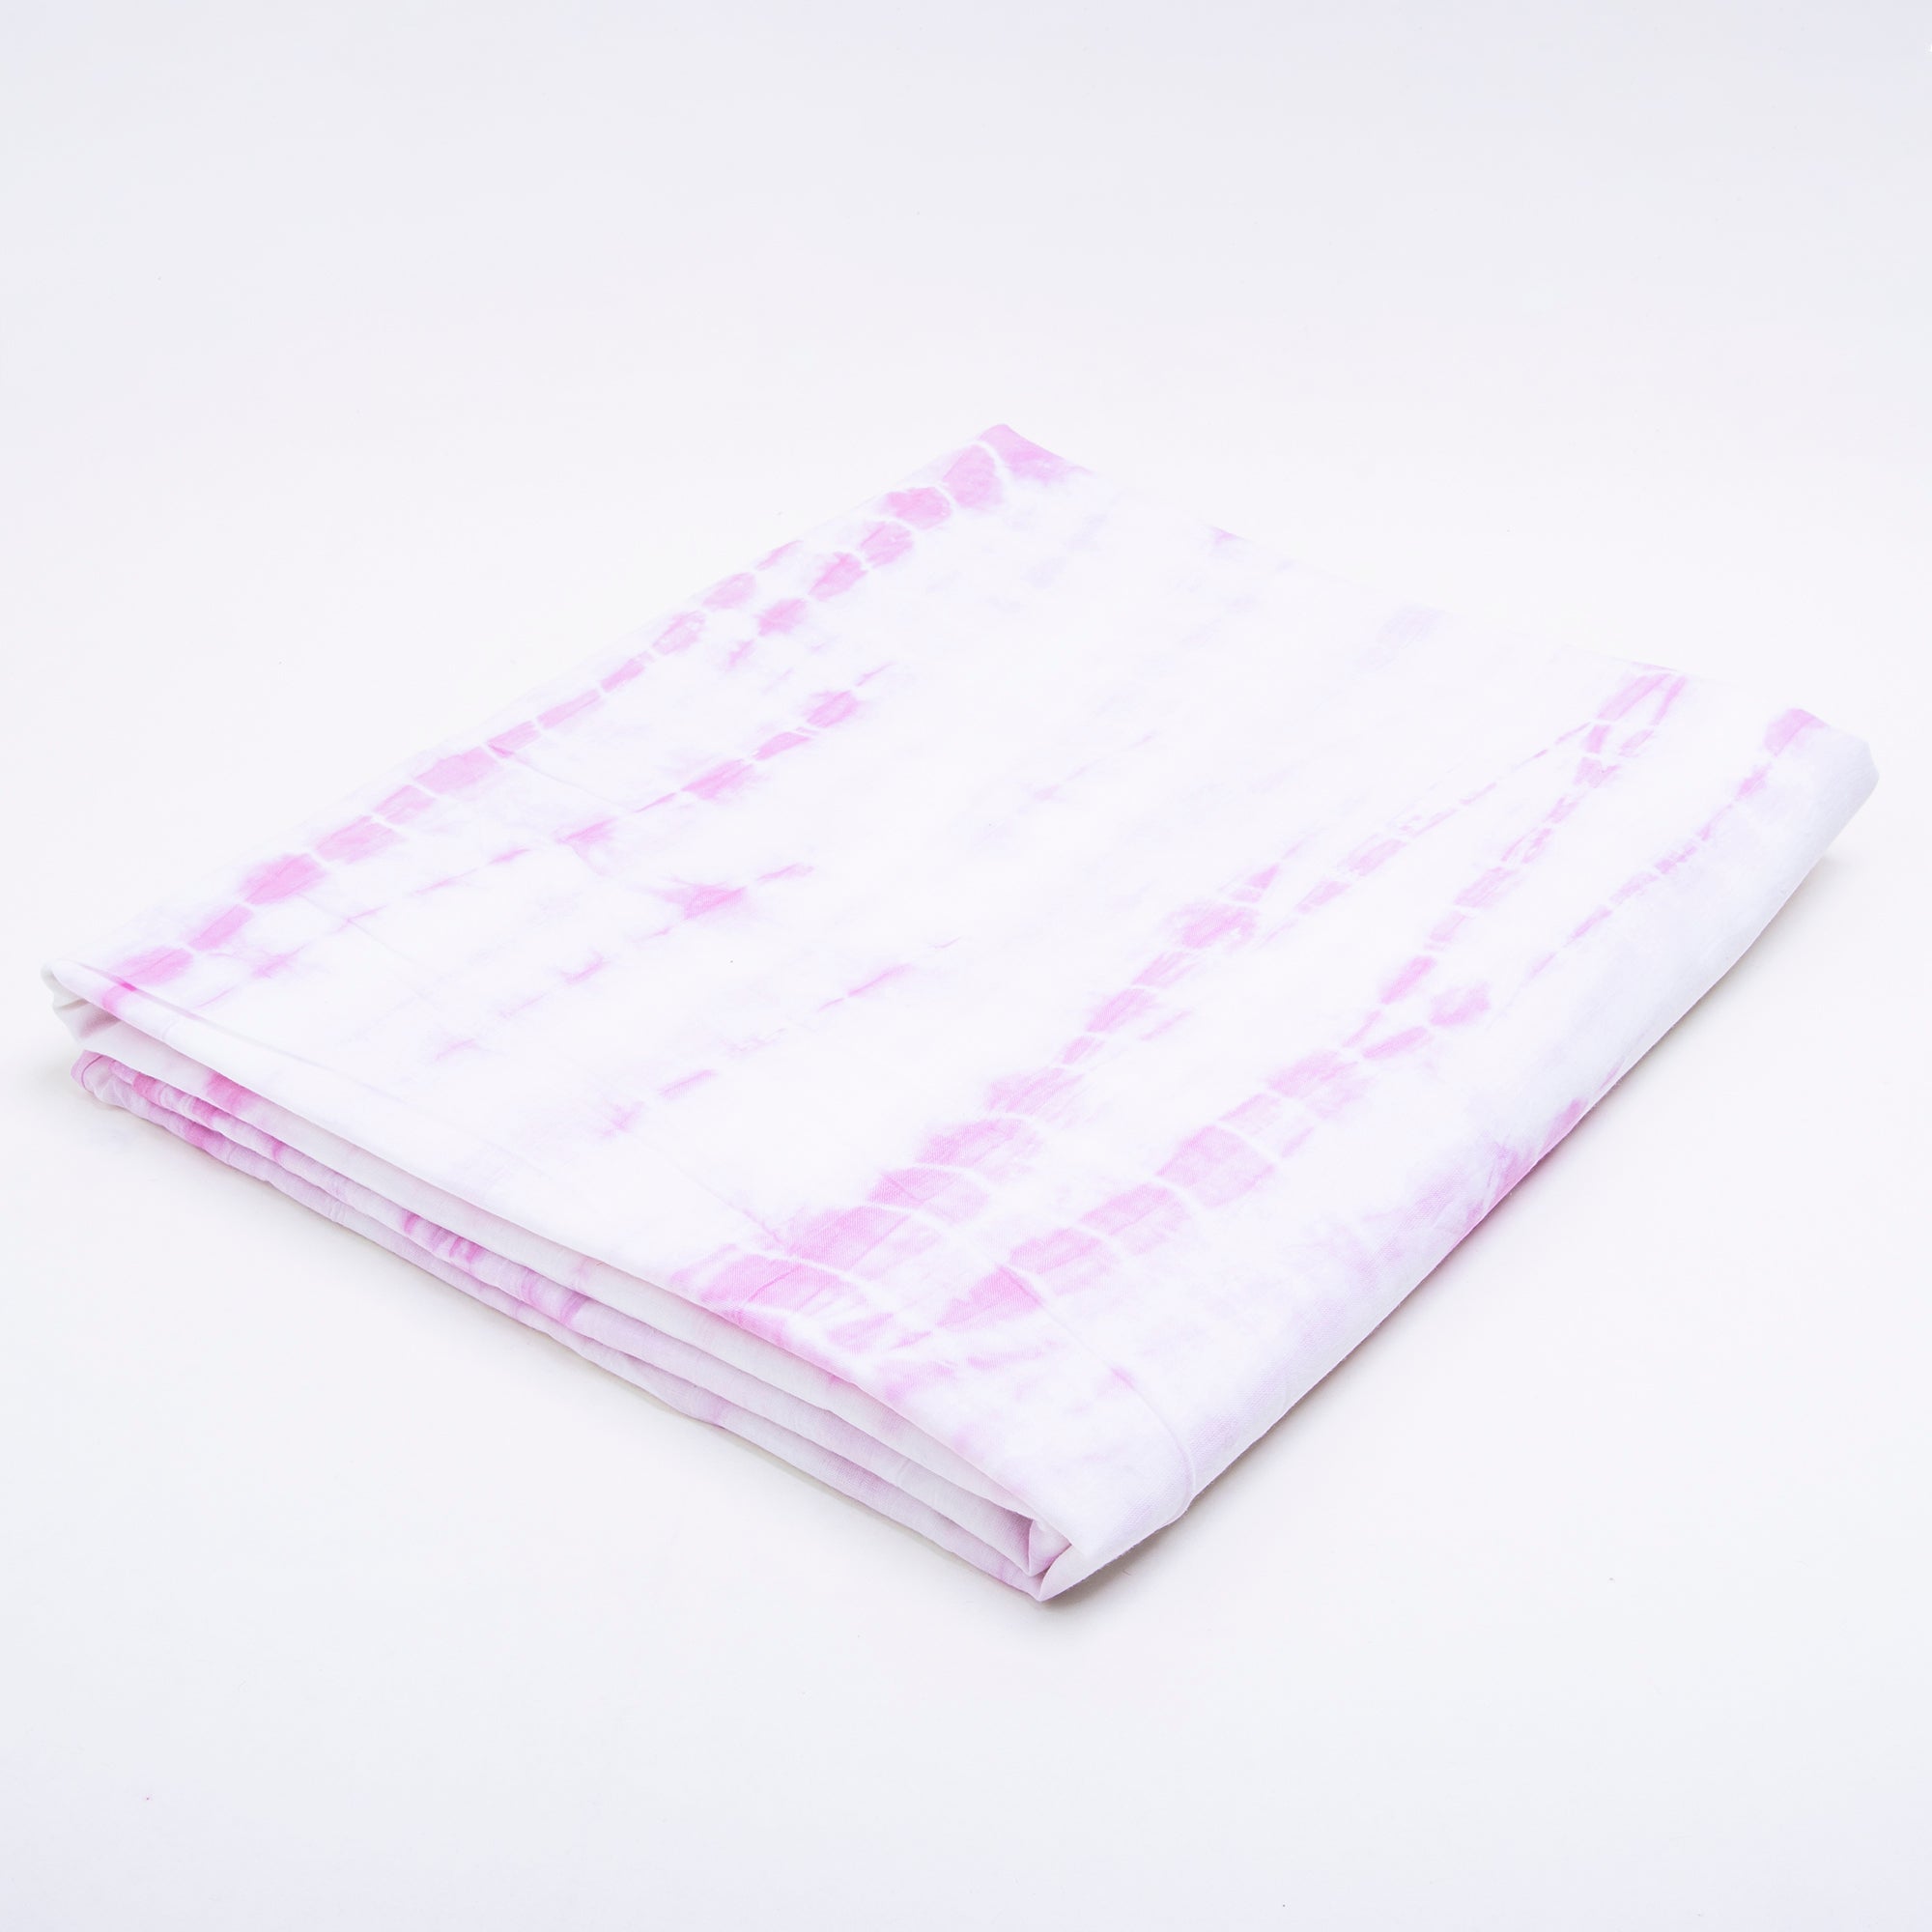 Purple Haze Cotton Block Fabric Tie Dye Printed Fabric